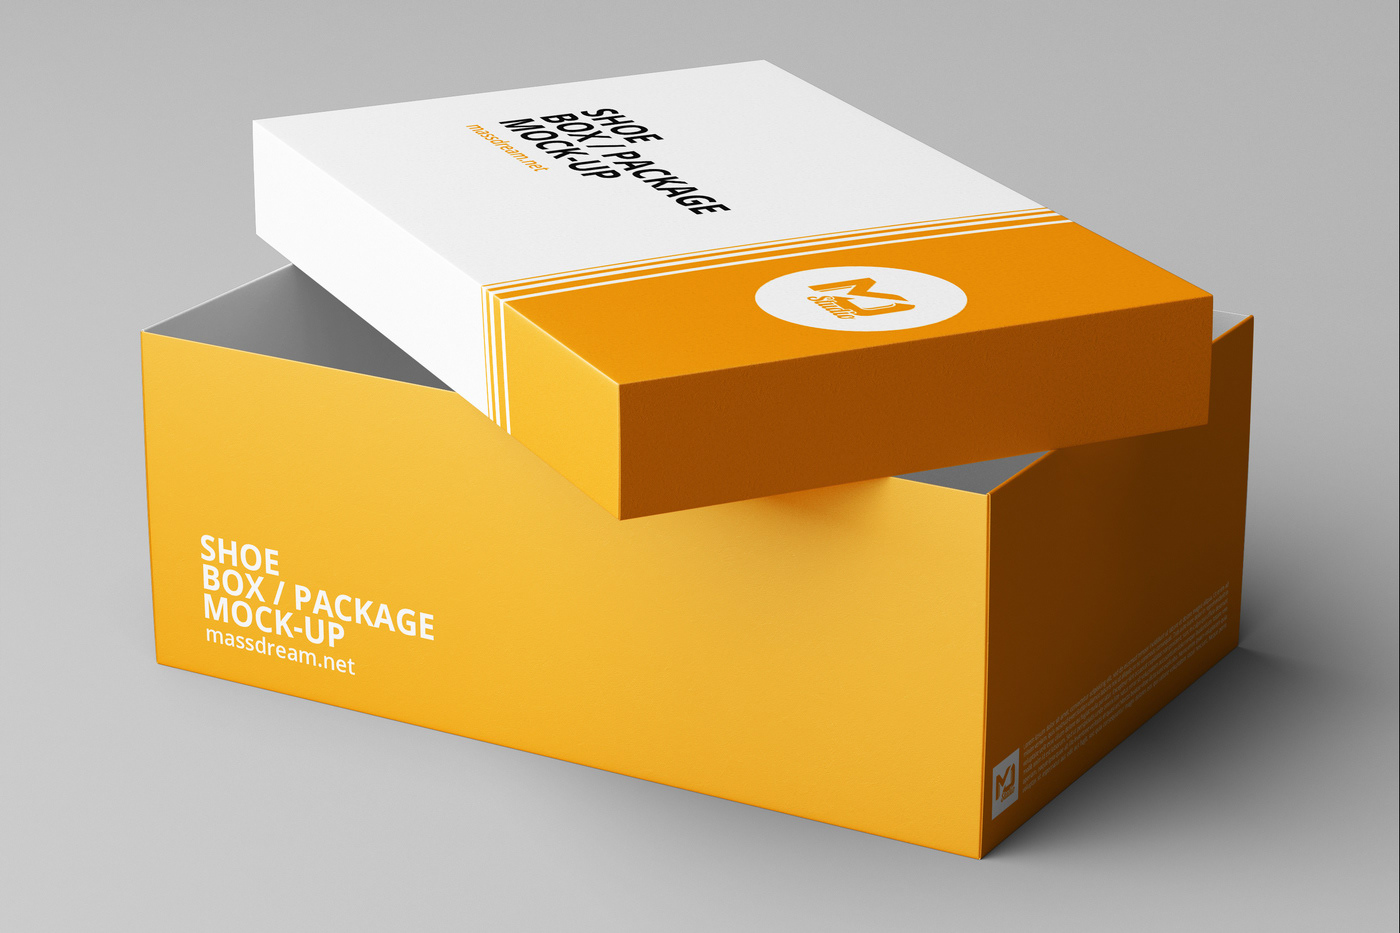 Package errno. Коробка для обуви мокап. Коробка Design. Мокап коробки для упаковки. Packing Boxes Design.